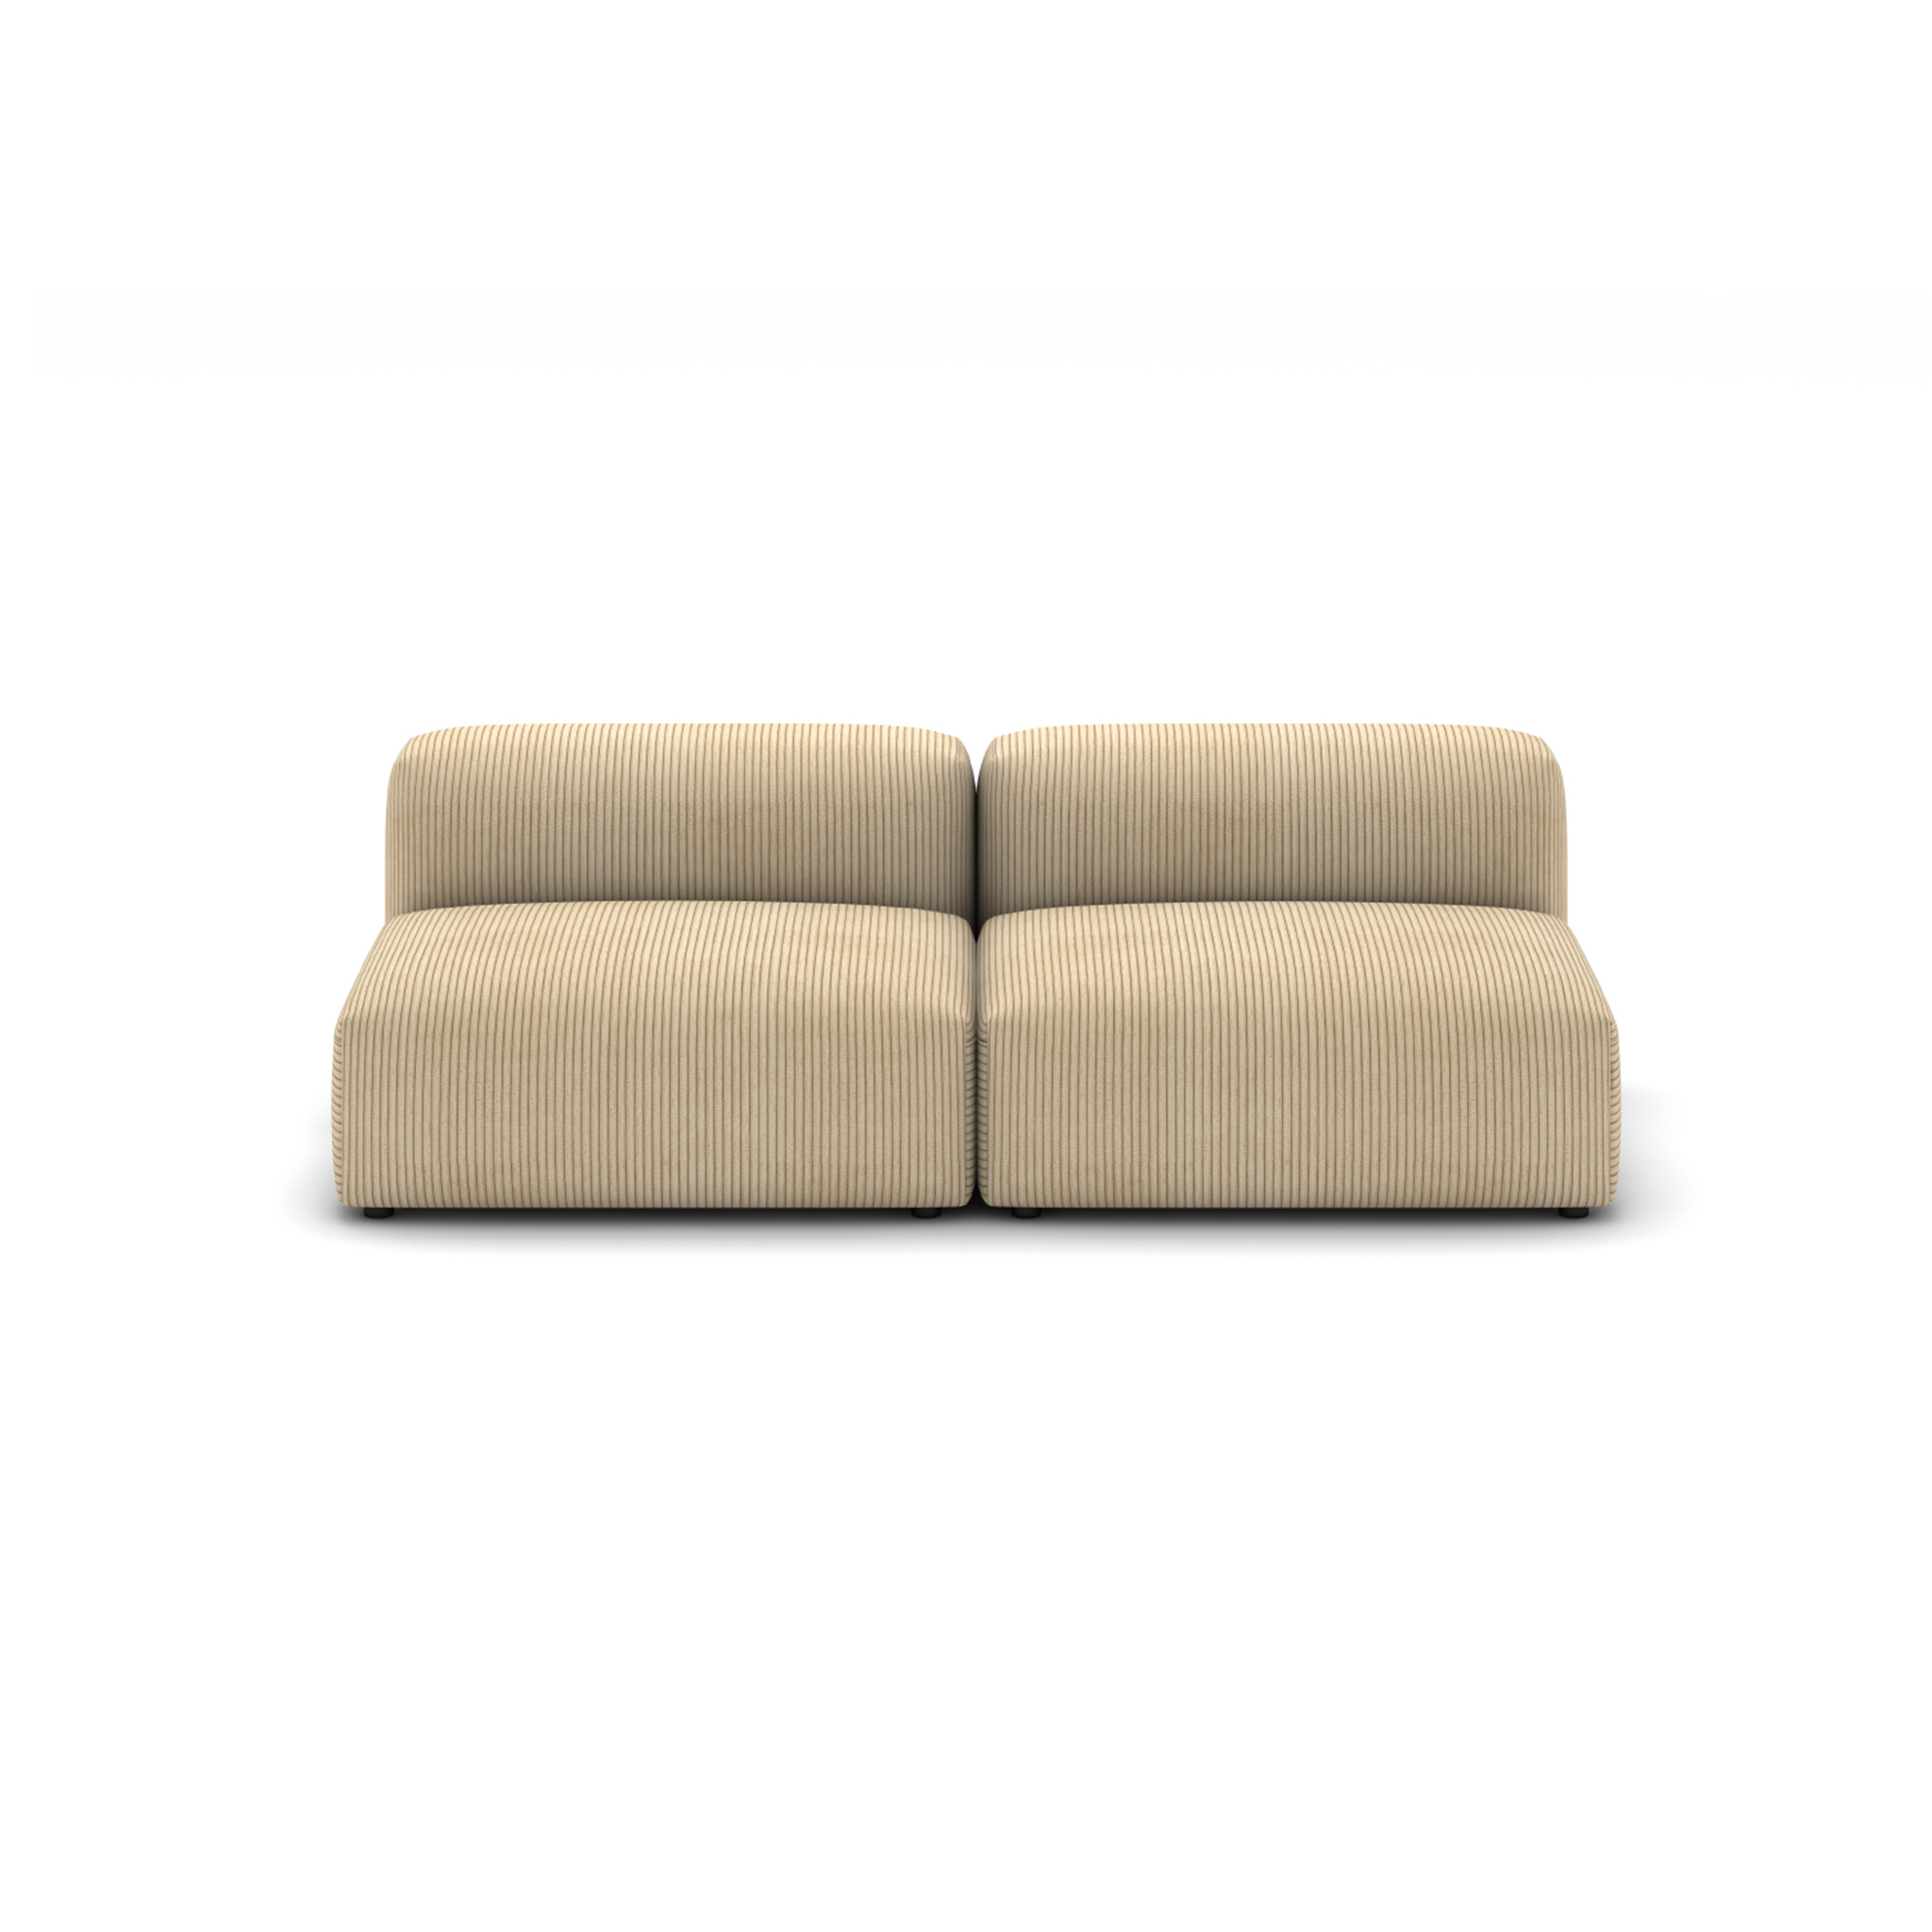 Flex Loft Modular Sofa